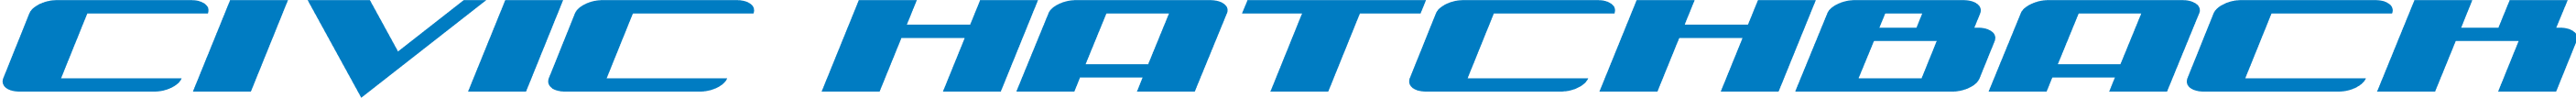 logo insigth